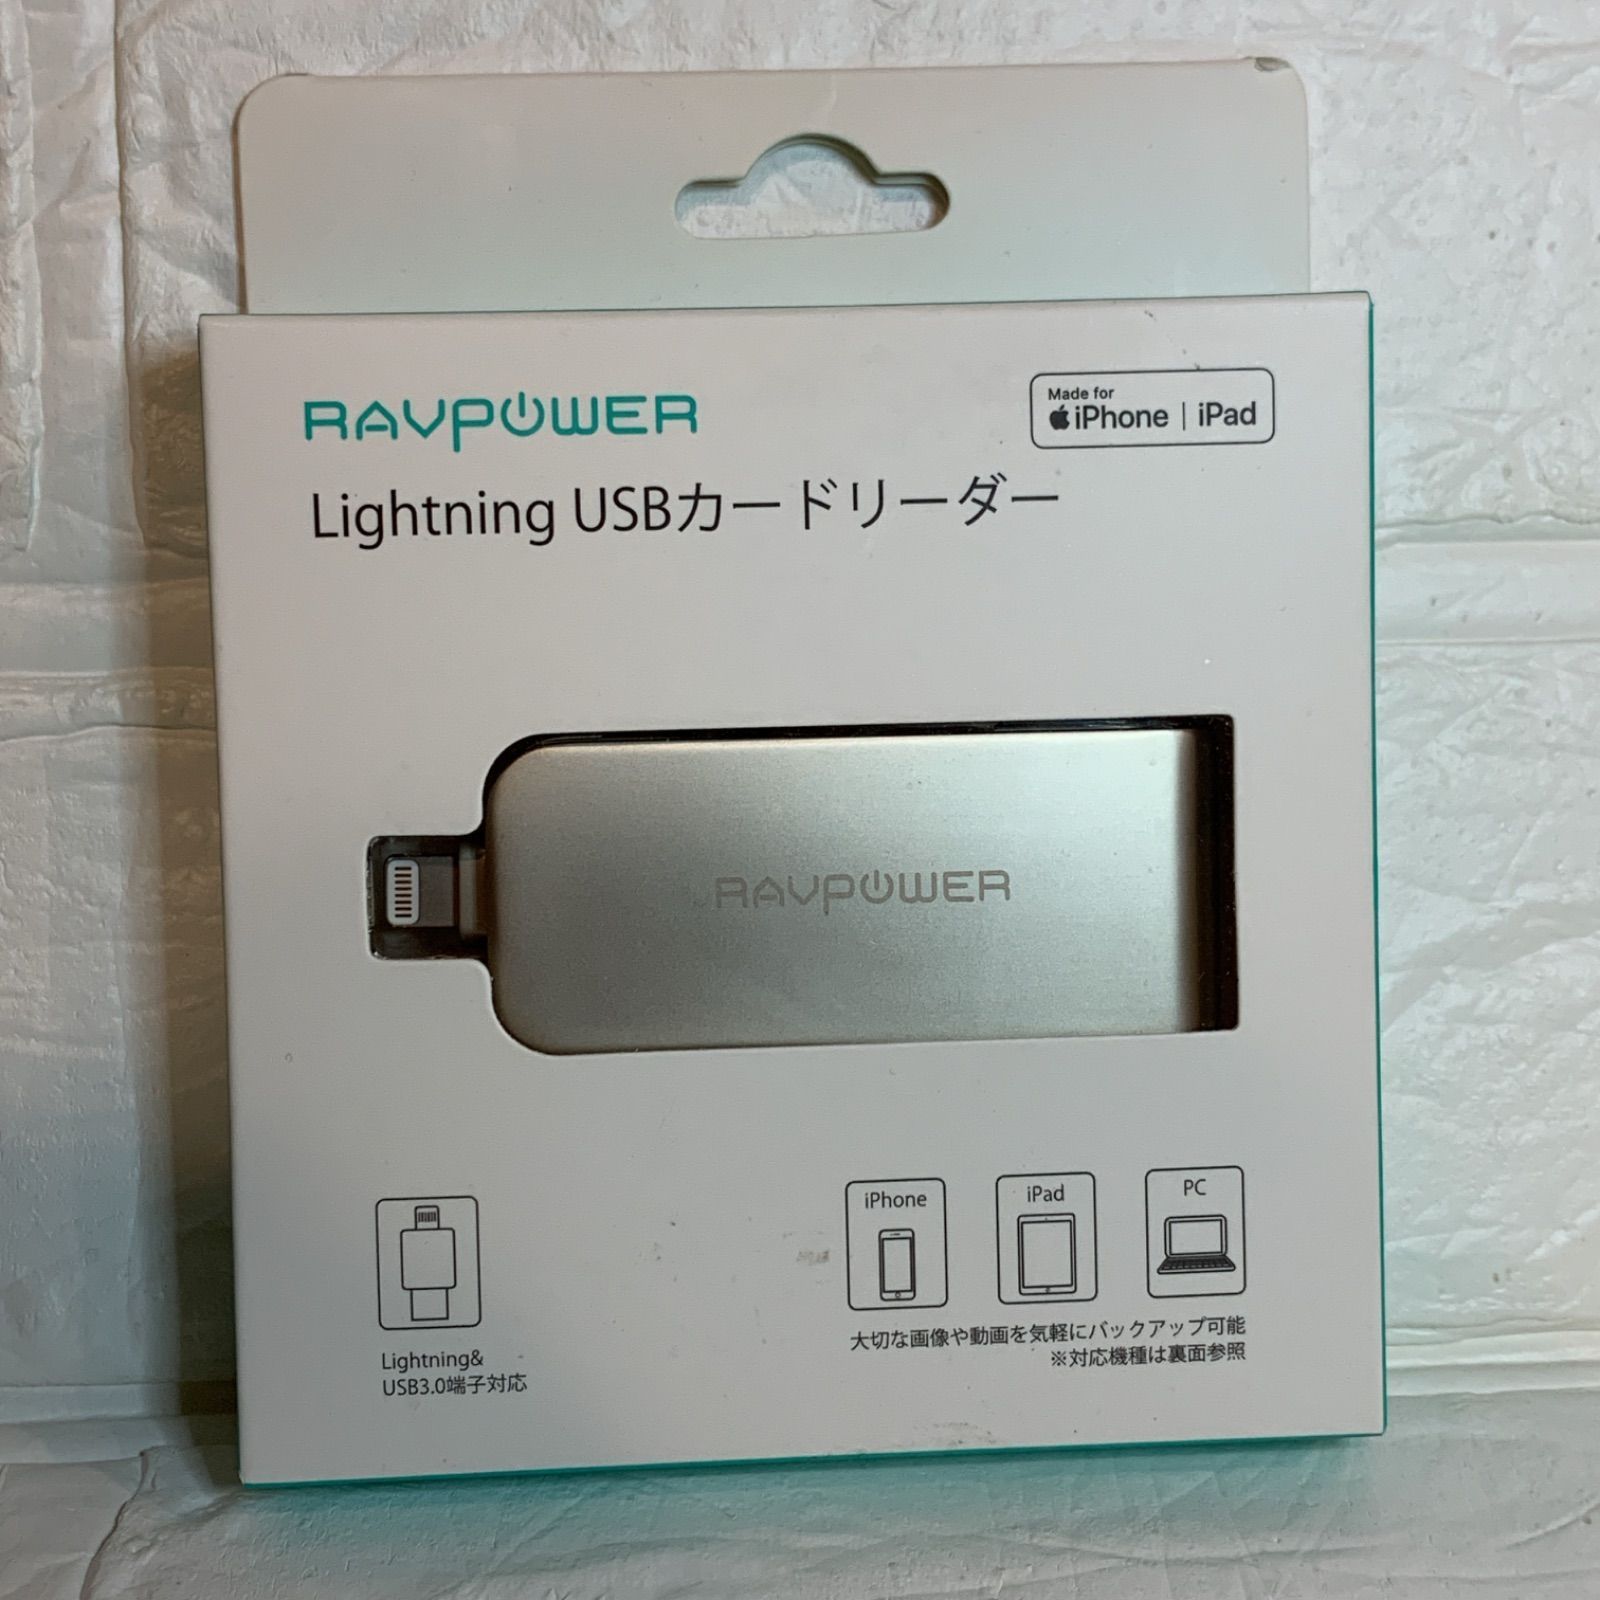 RAVPower Lightning USB メモリーカードリーダー新品 FRESCO SHOP メルカリ